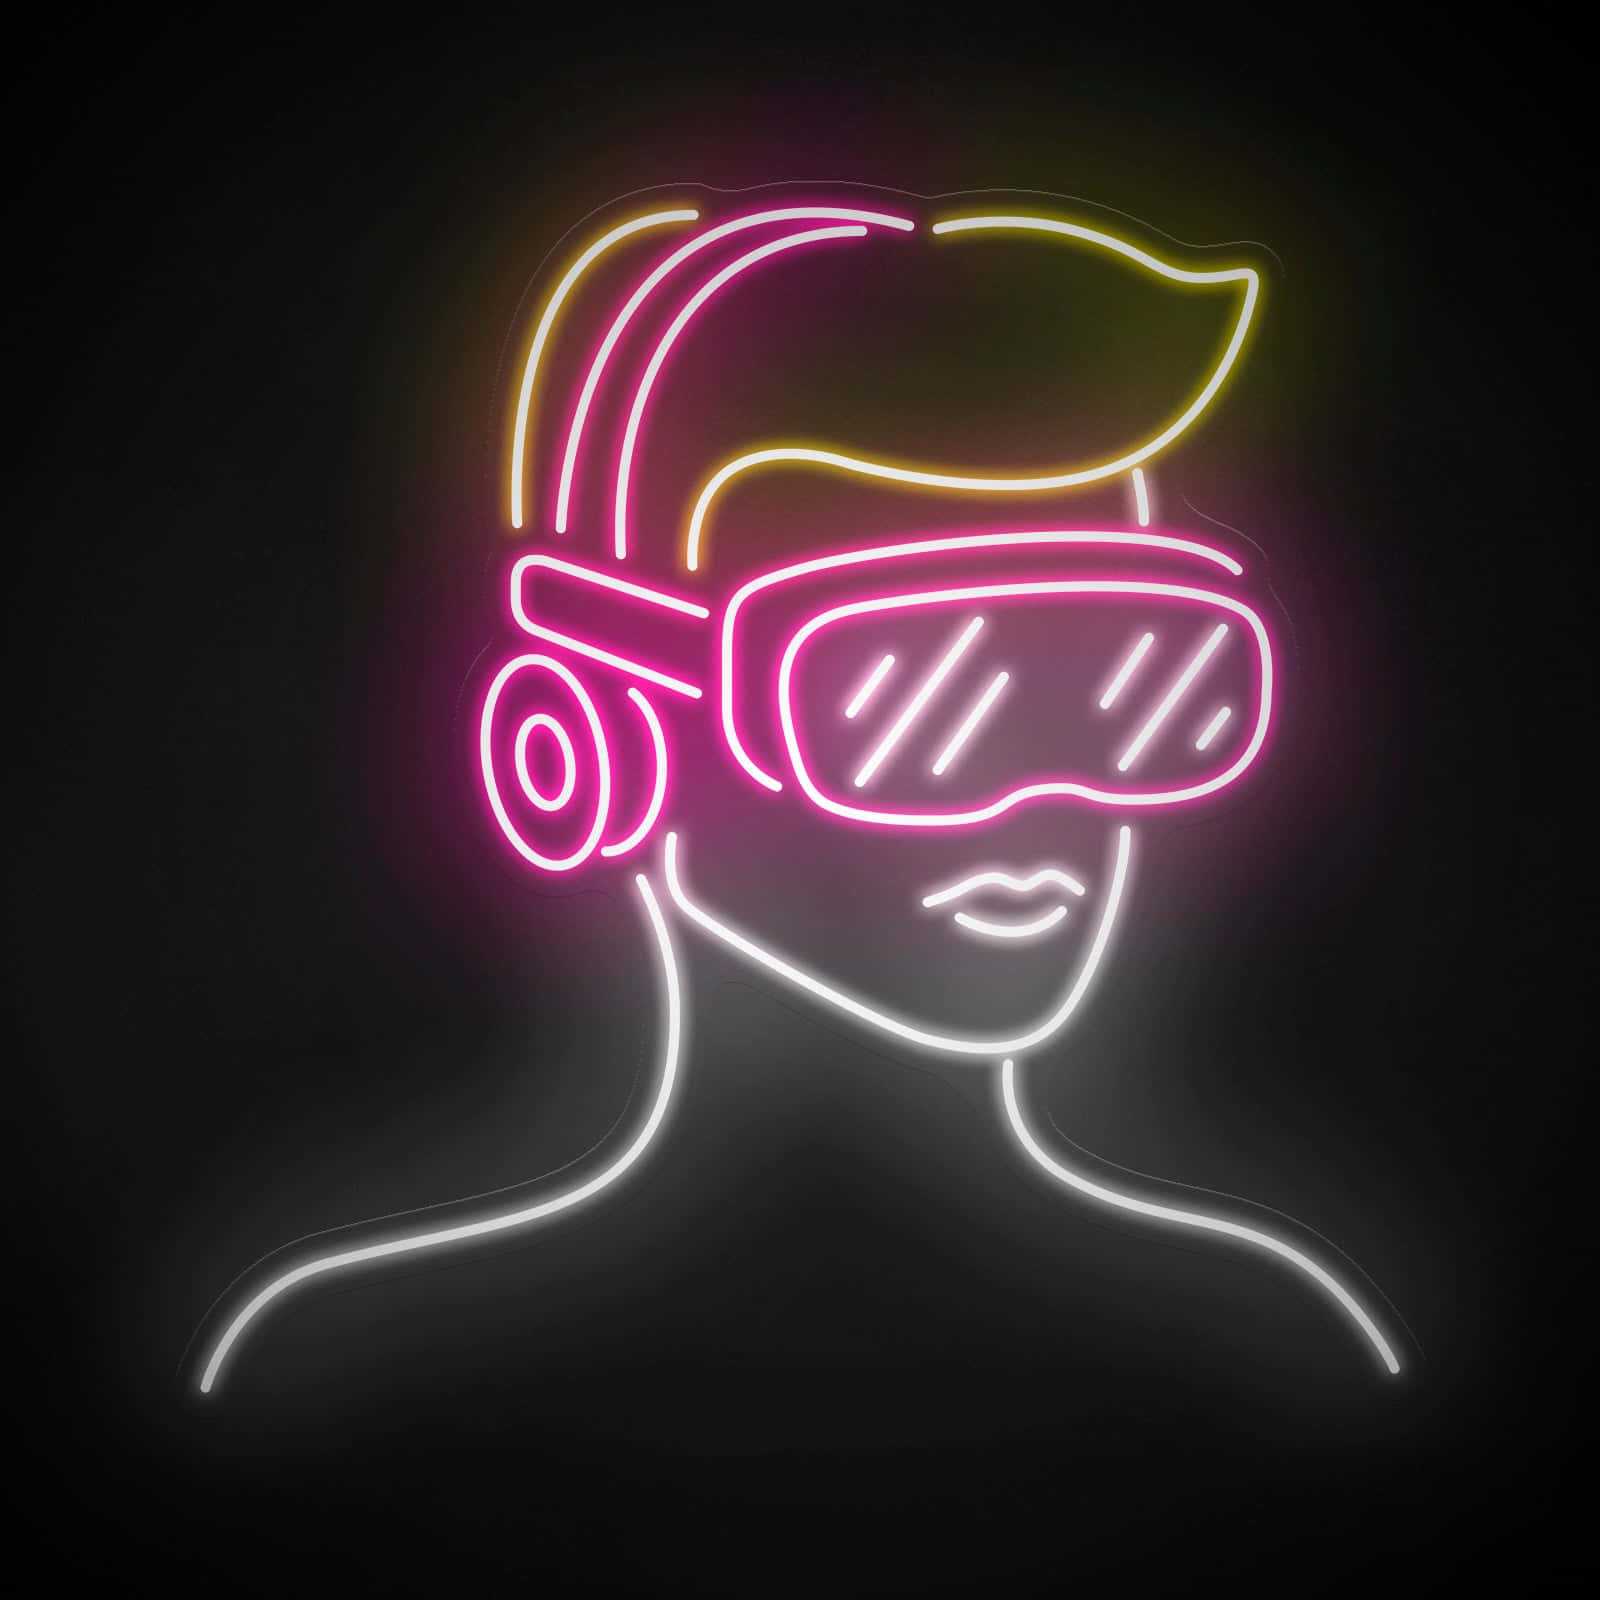 Immersive Virtual Reality World In Neon Lights. Wallpaper